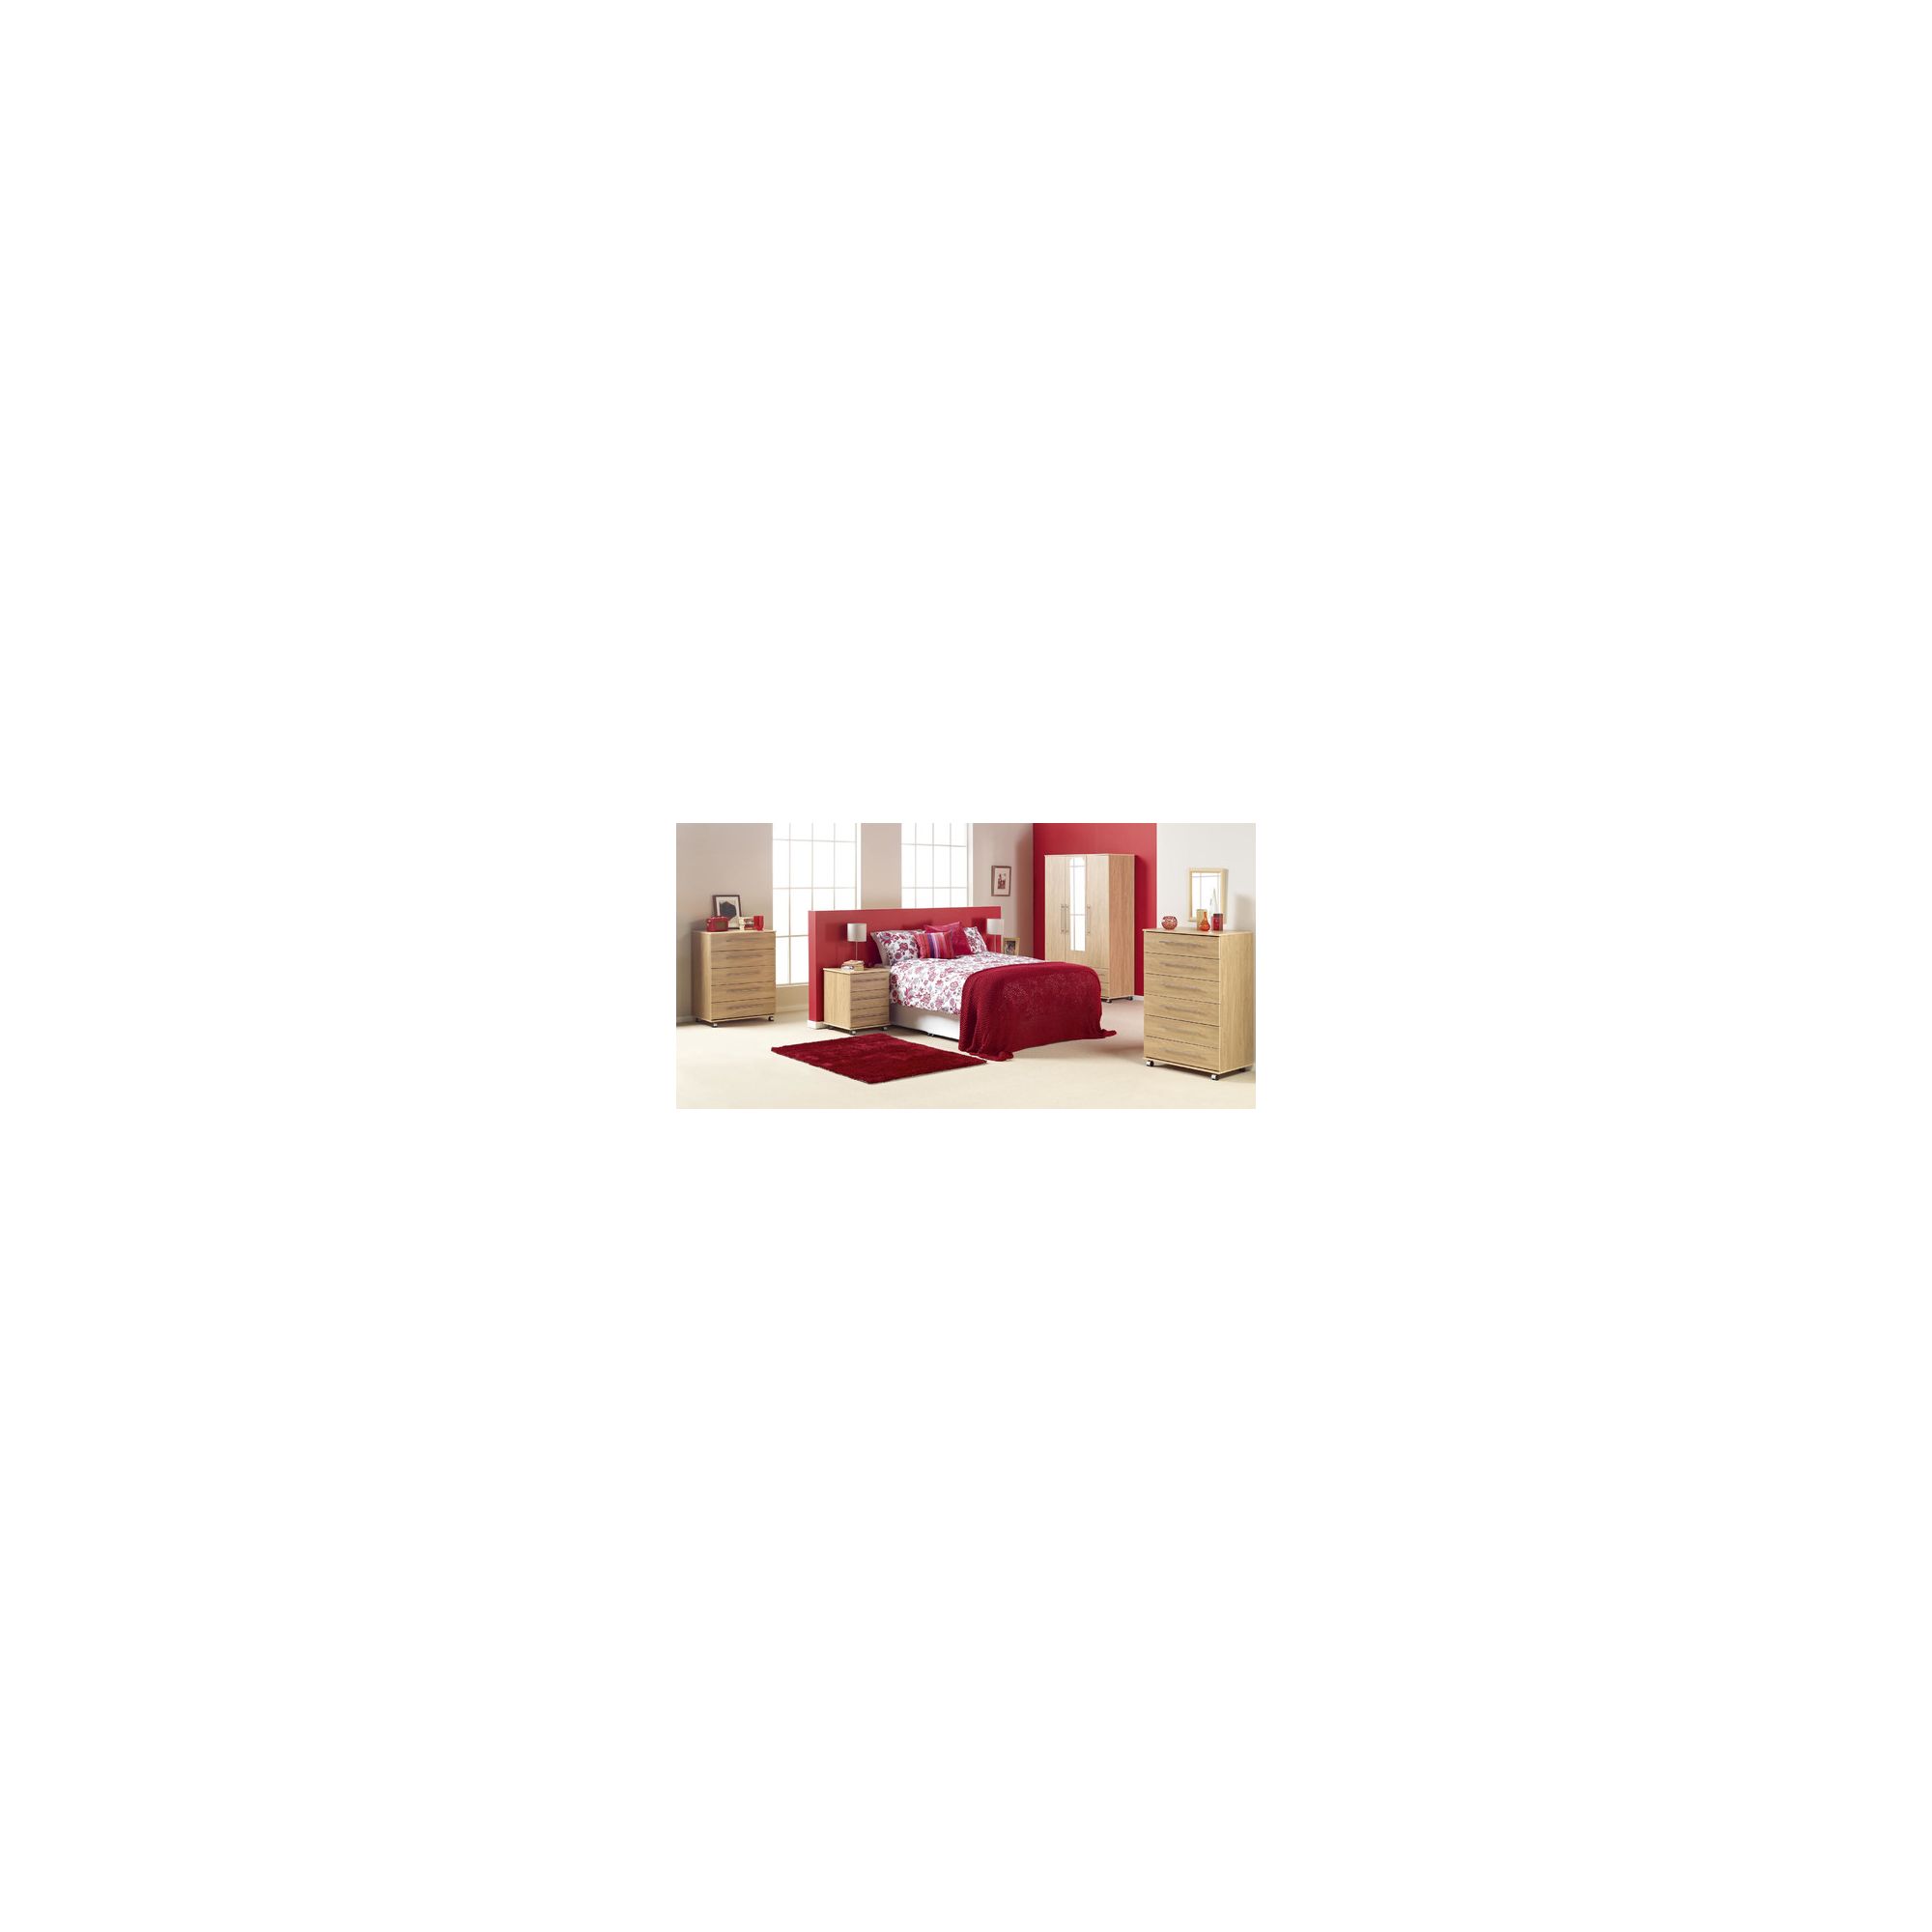 Ideal Furniture Bobby 4 Door Wardrobe - Walnut at Tesco Direct